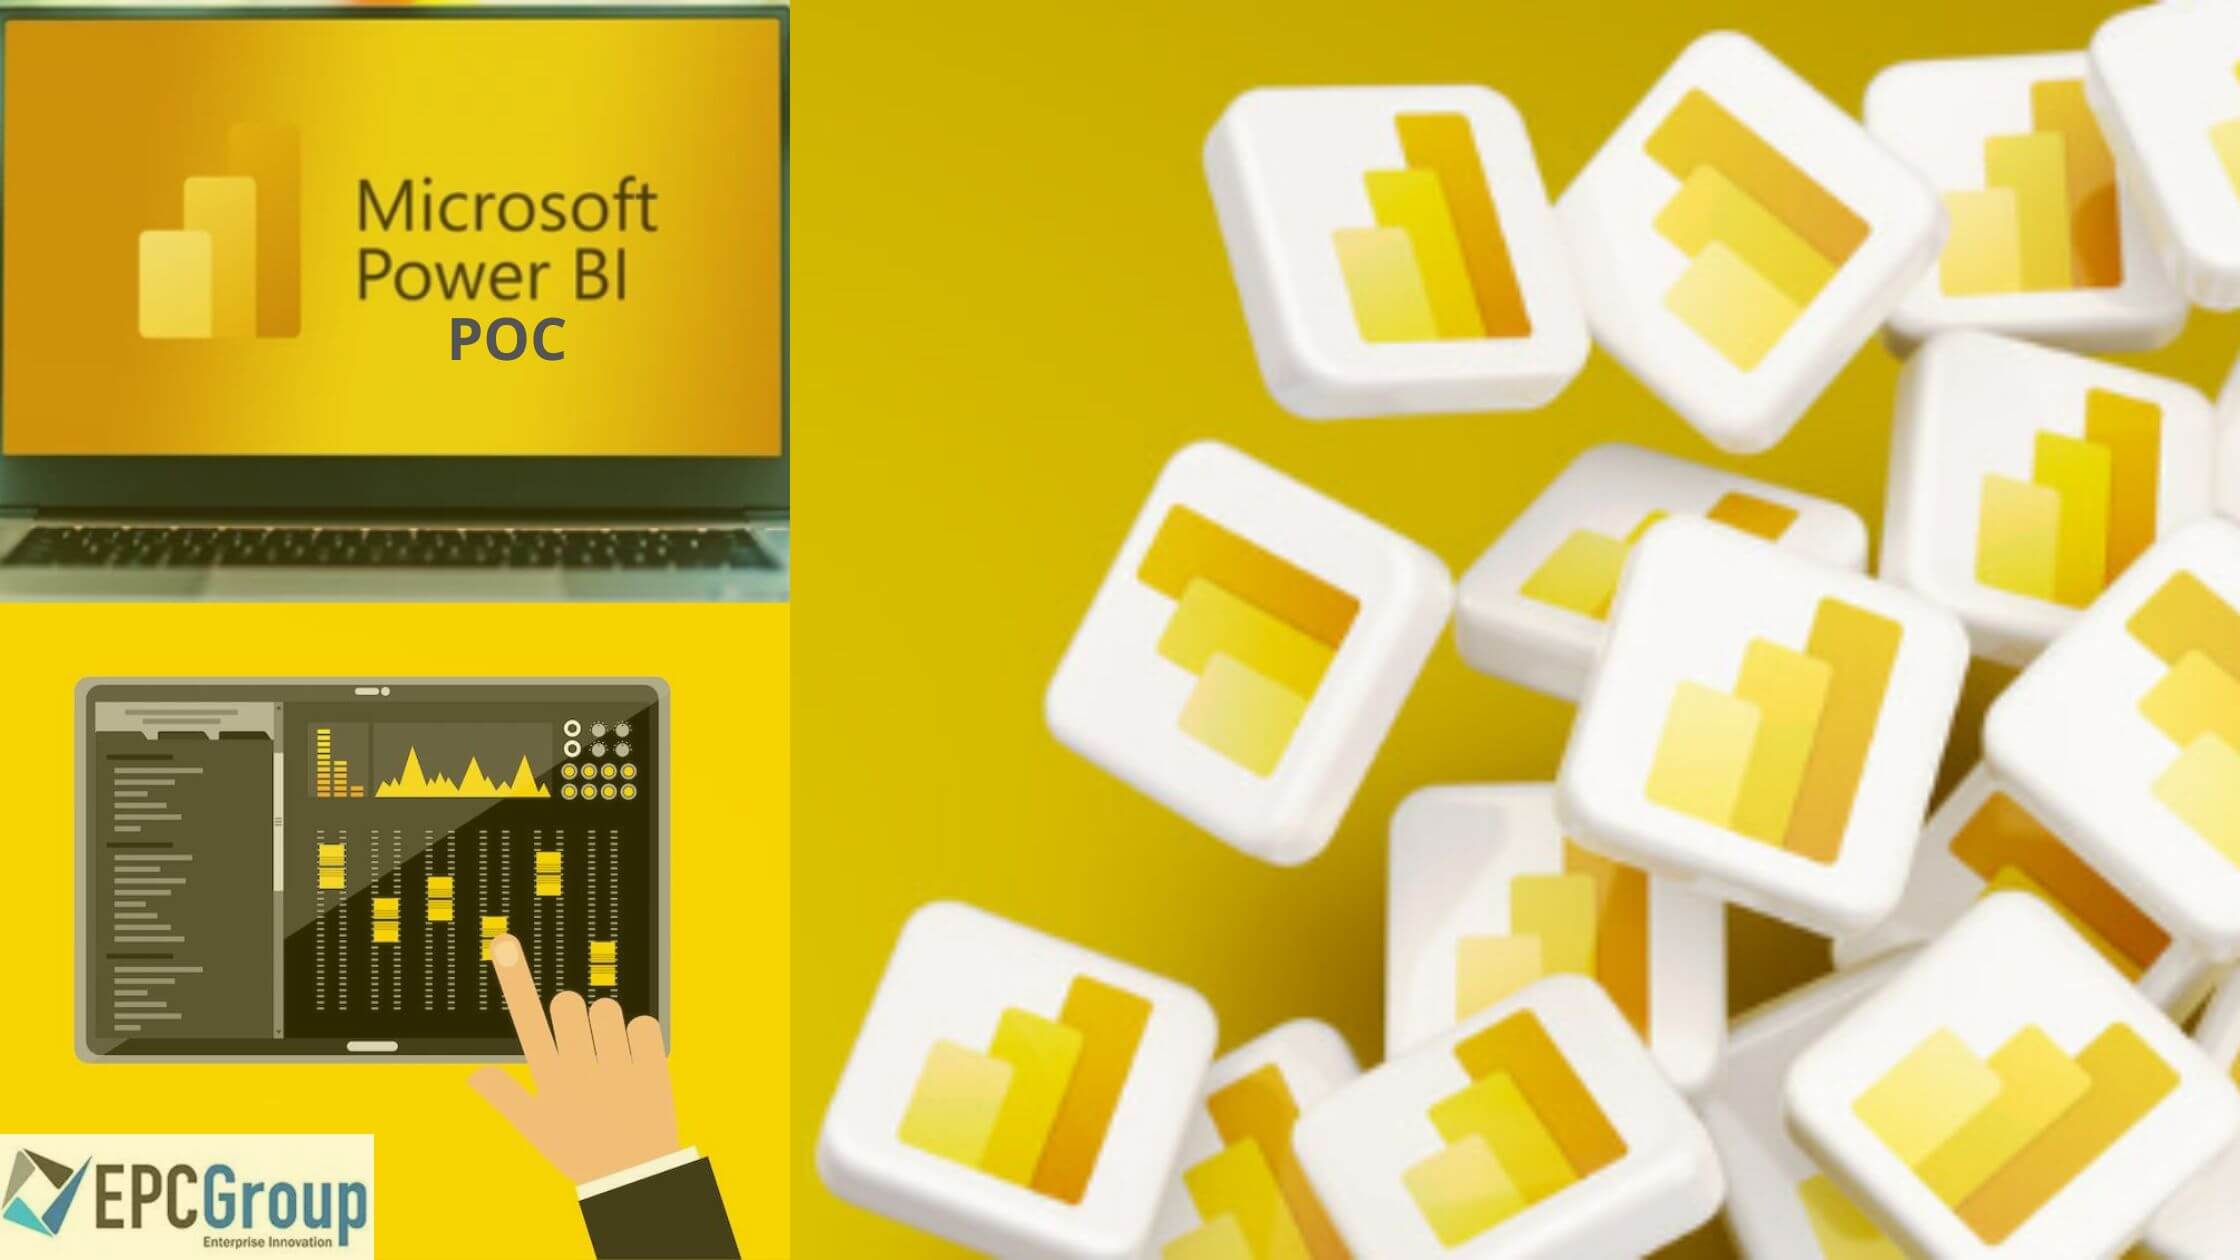 Is Microsoft Power BI POC Your New Online Dashboard App? - thumb image